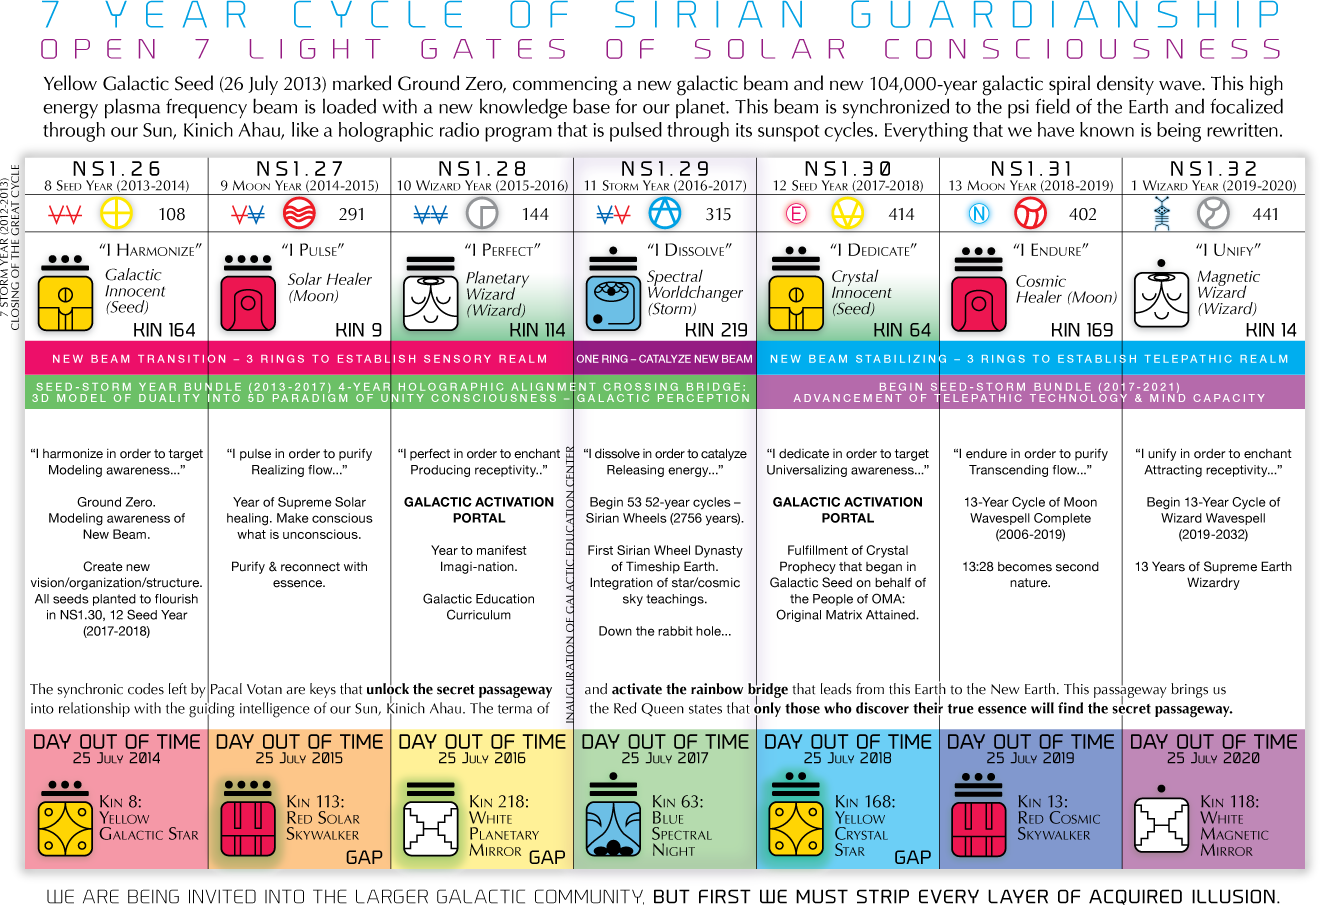 7-Year Cycle of Sirian Guardianship